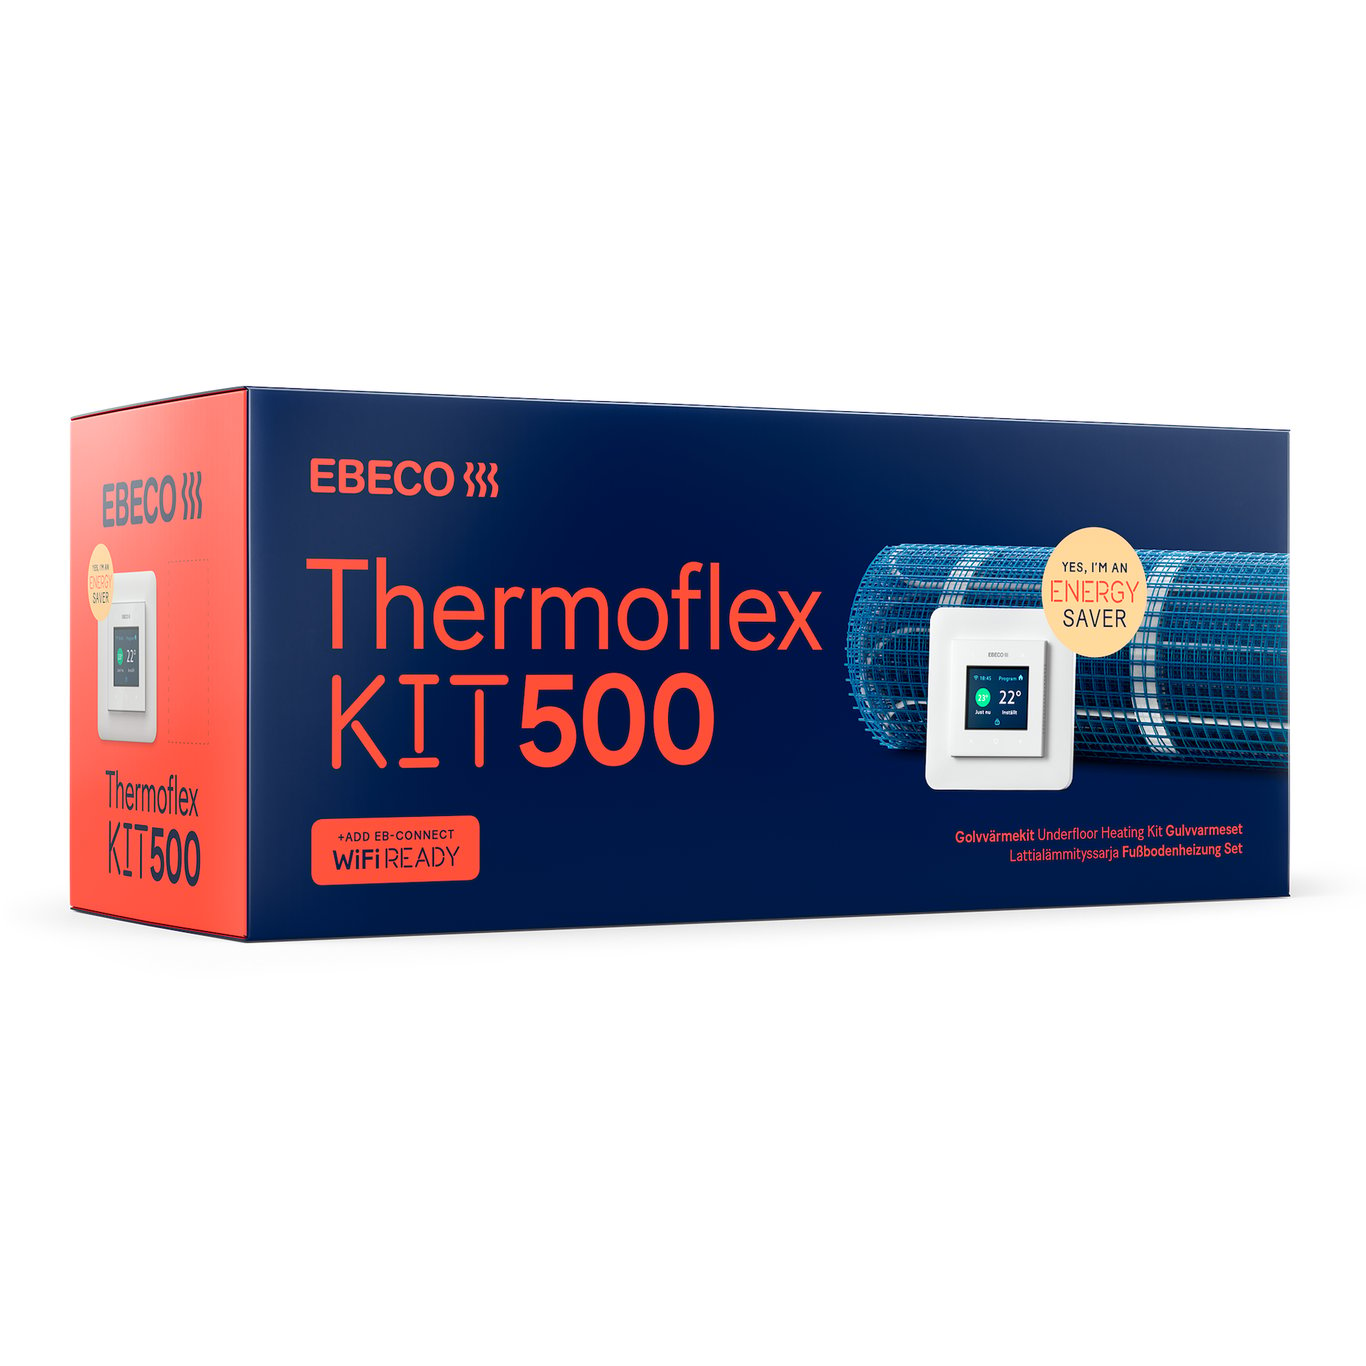 EBECO THERMOFLEX KIT 500 3,9M2 480W